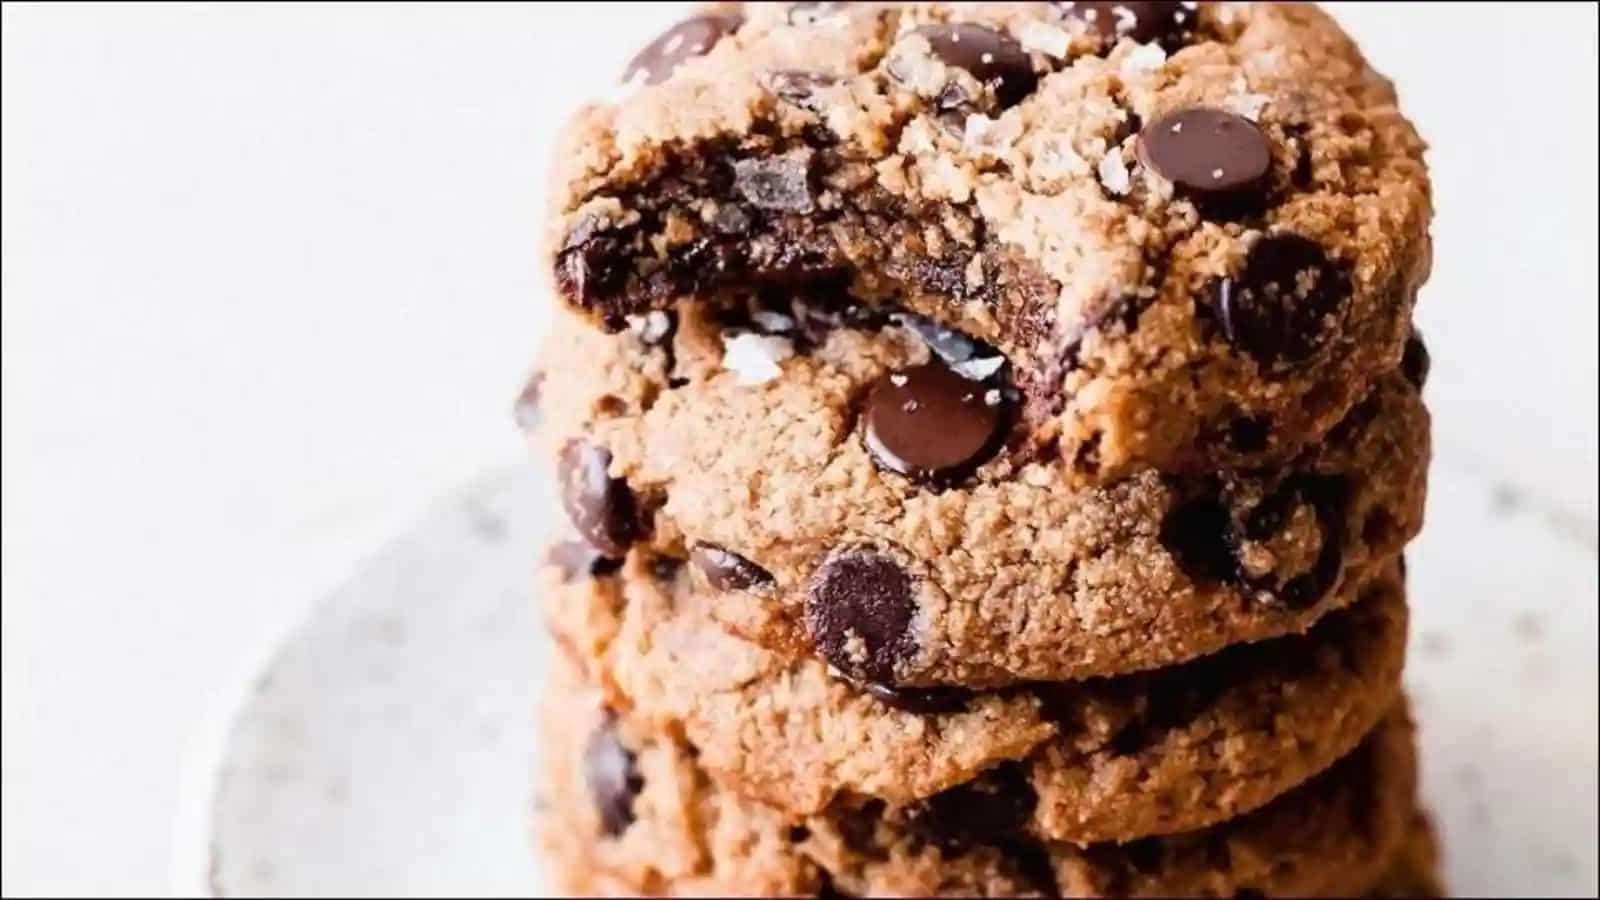 Recipe: Got sourdough discard? Use it to make Sourdough Chocolate Chip Cookies